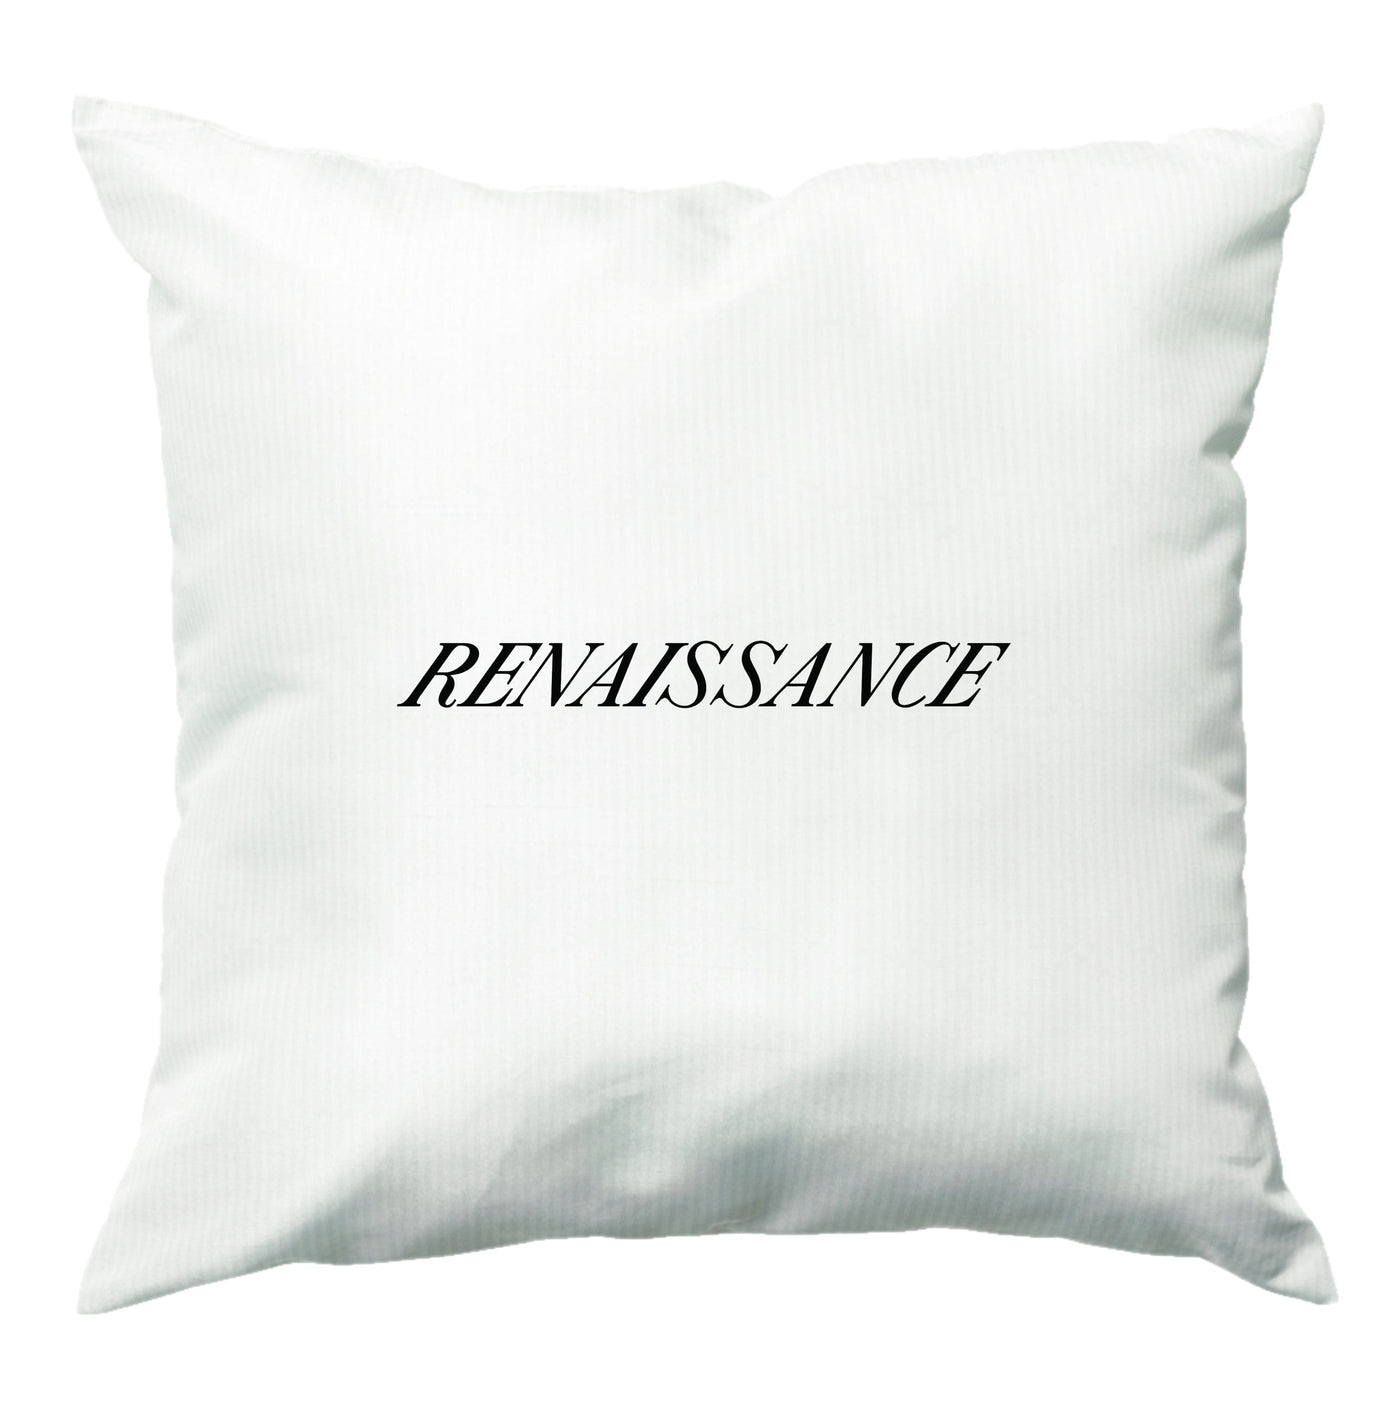 Renaissance - Beyonce Cushion